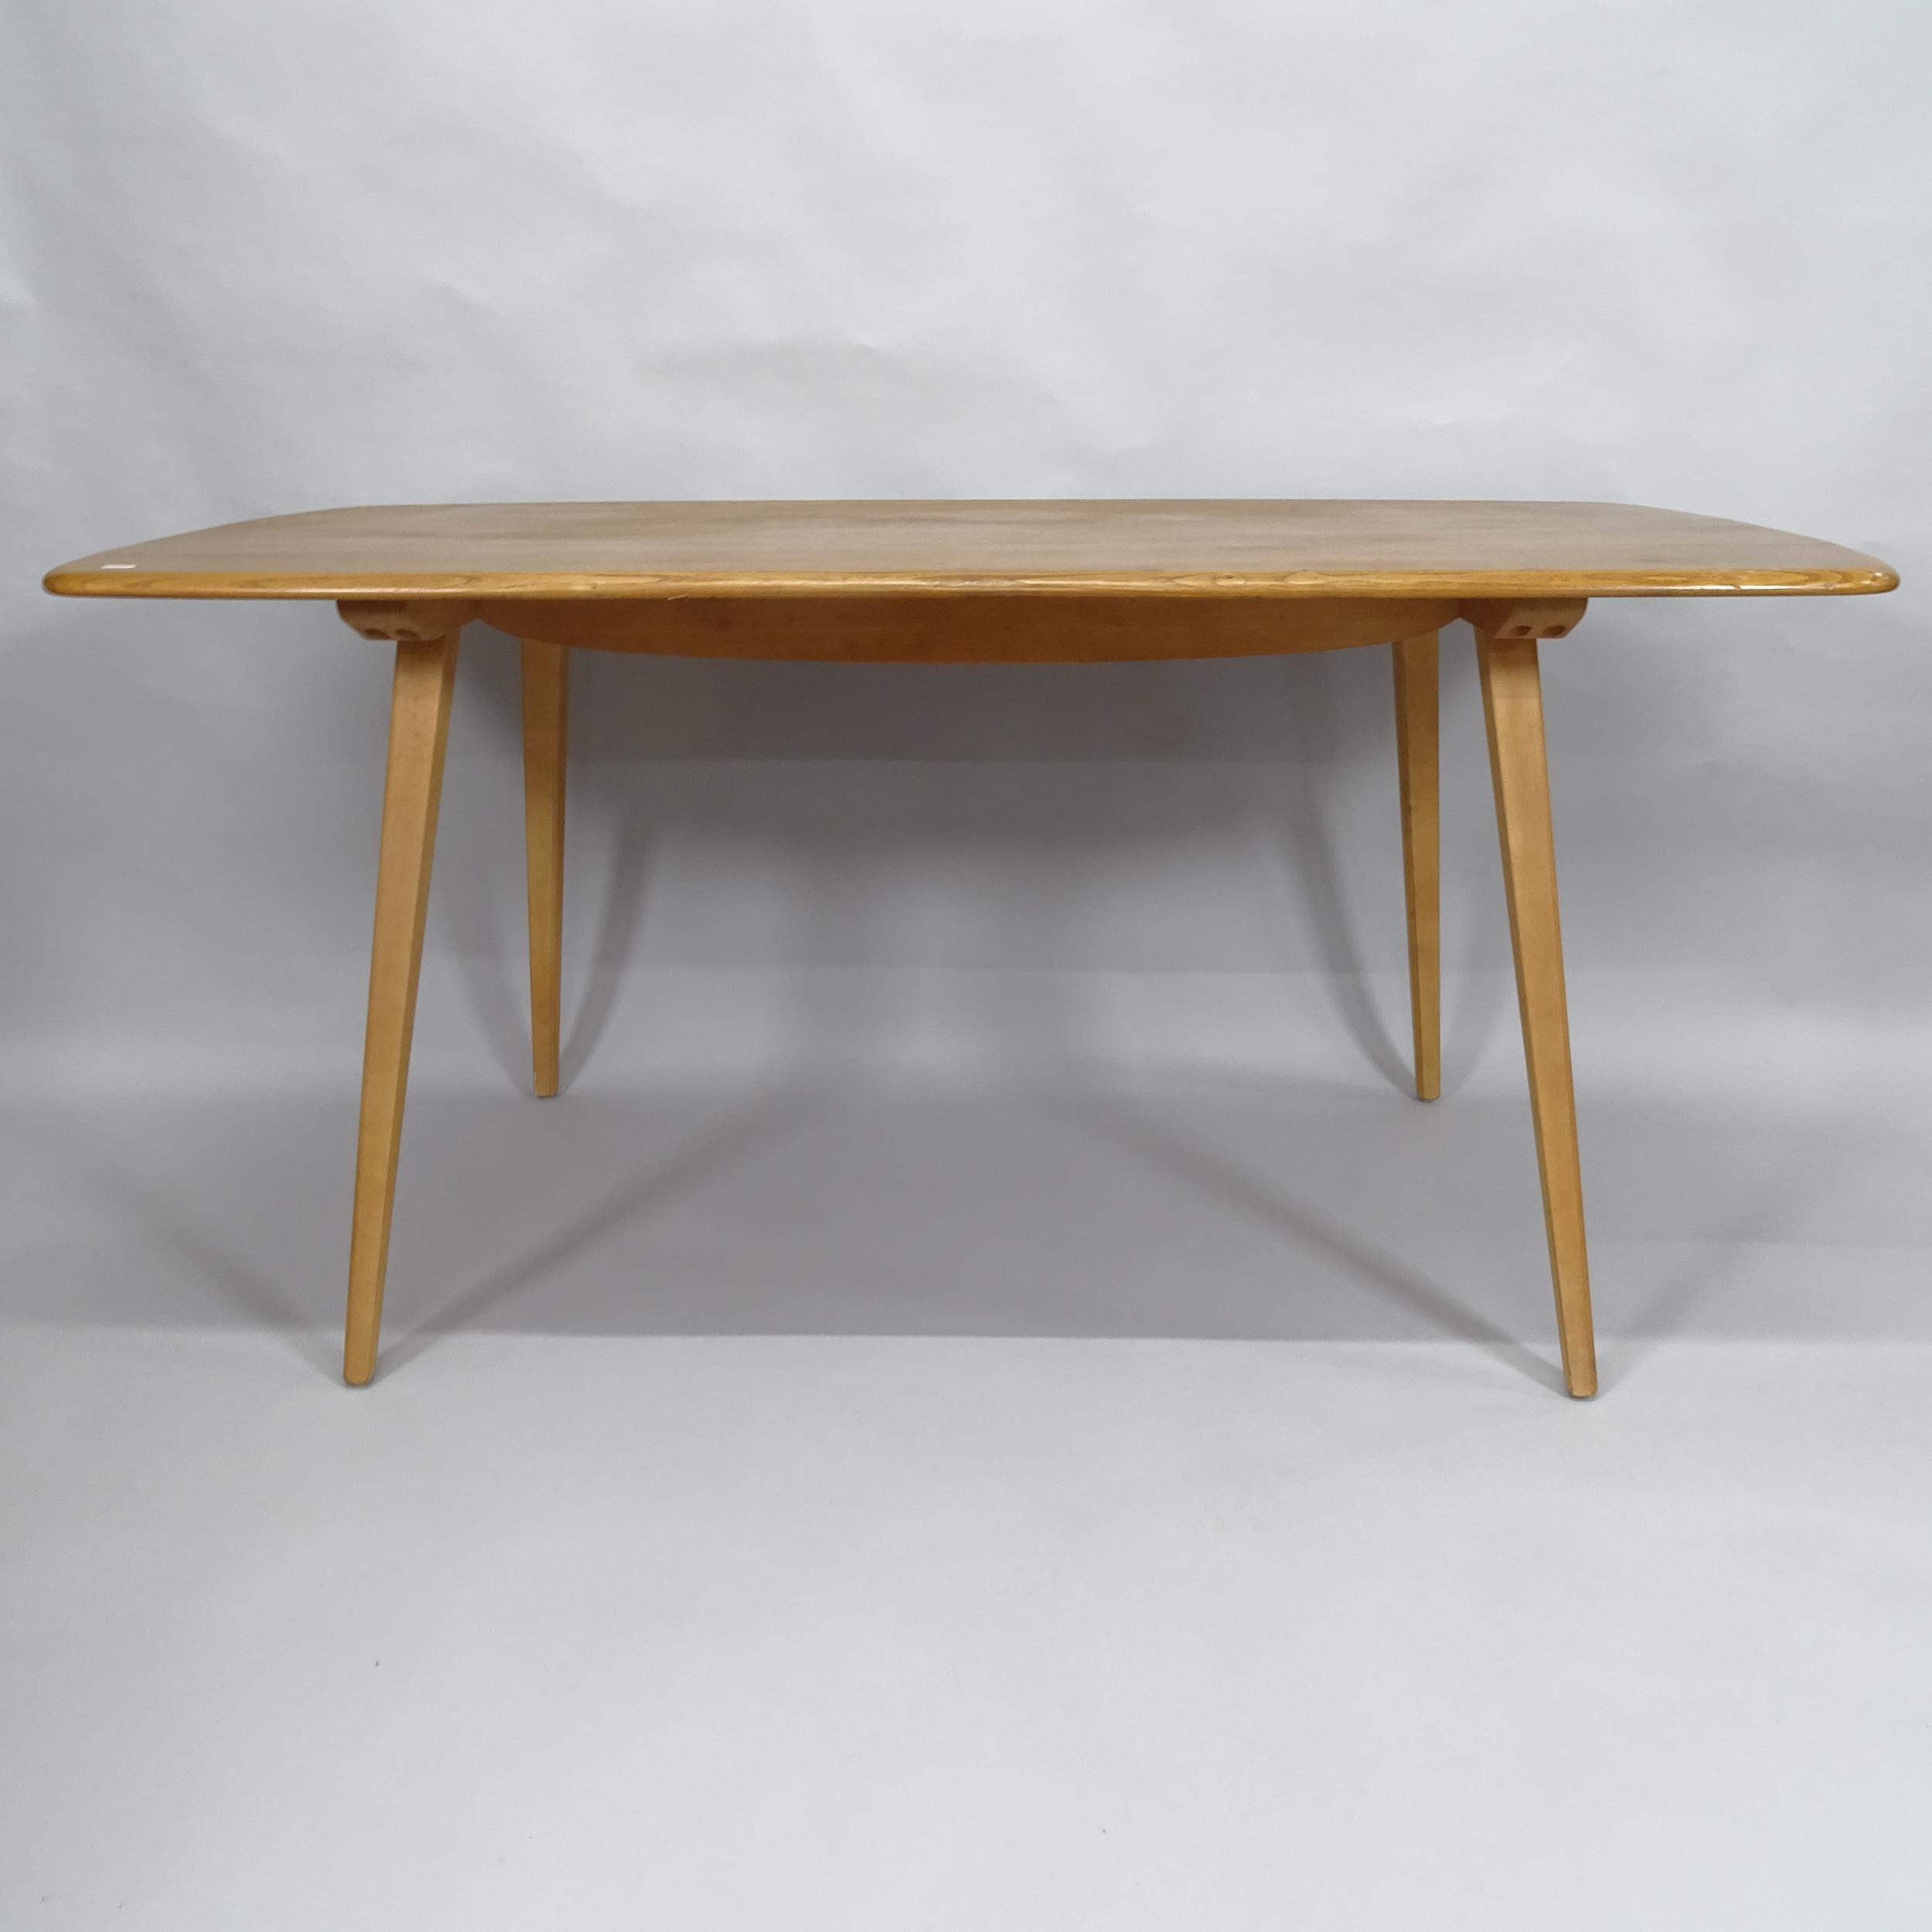 A mid-century Ercol Windsor elm plank-top dining table, circa 1960s, 152cm x 72cm x 76cm